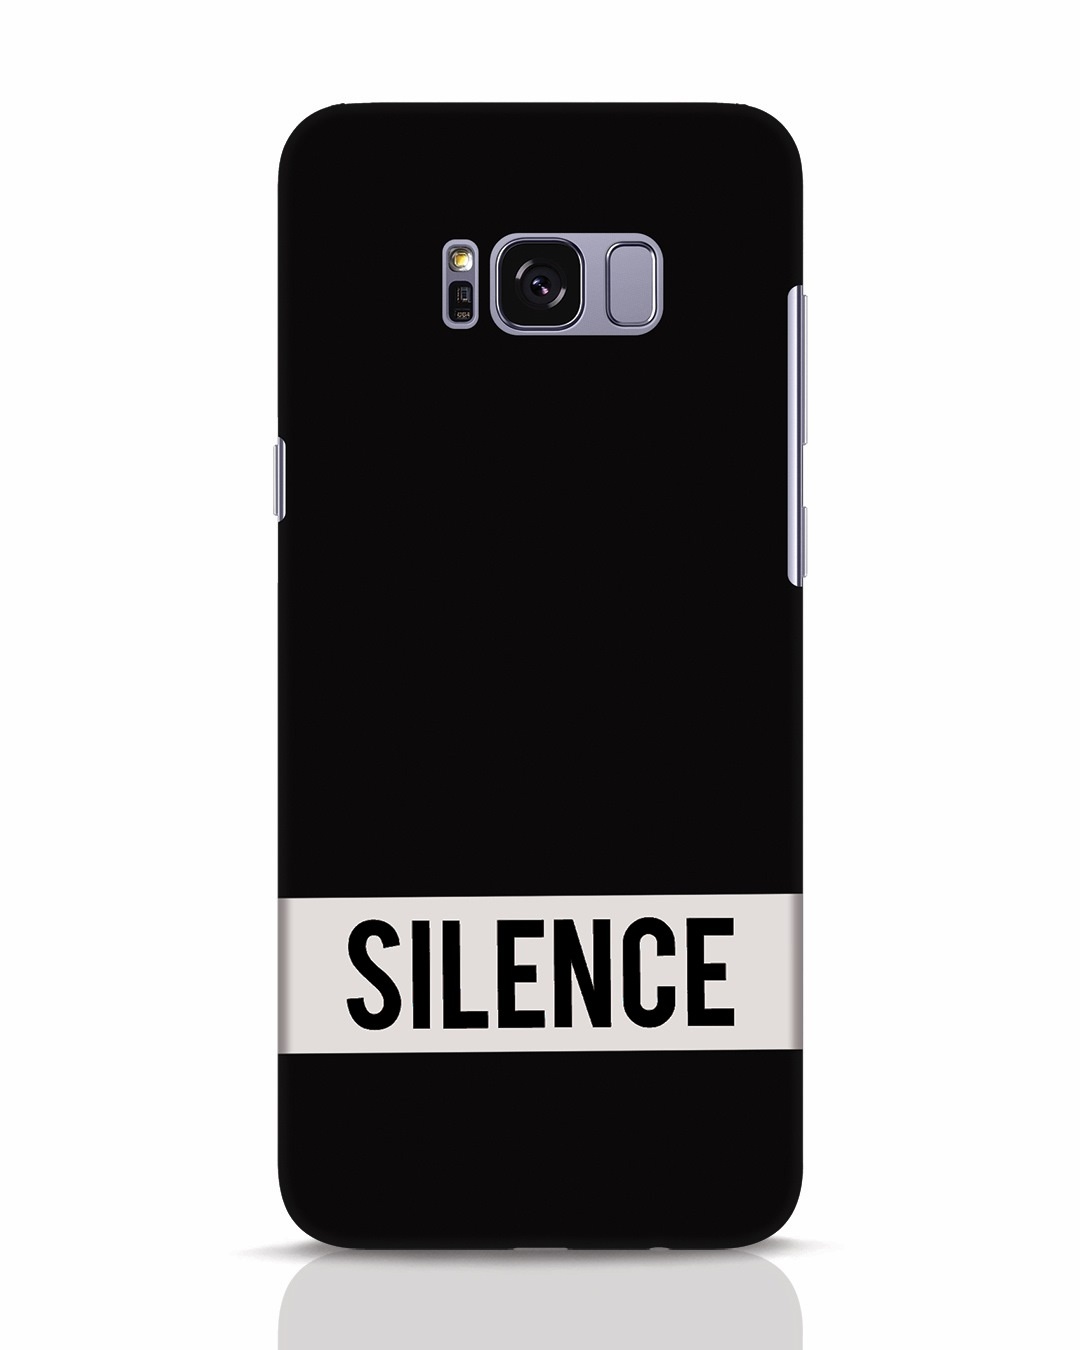 Silence Samsung Galaxy S8 Mobile Cover Samsung Galaxy S8 Mobile Covers Bewakoof.com